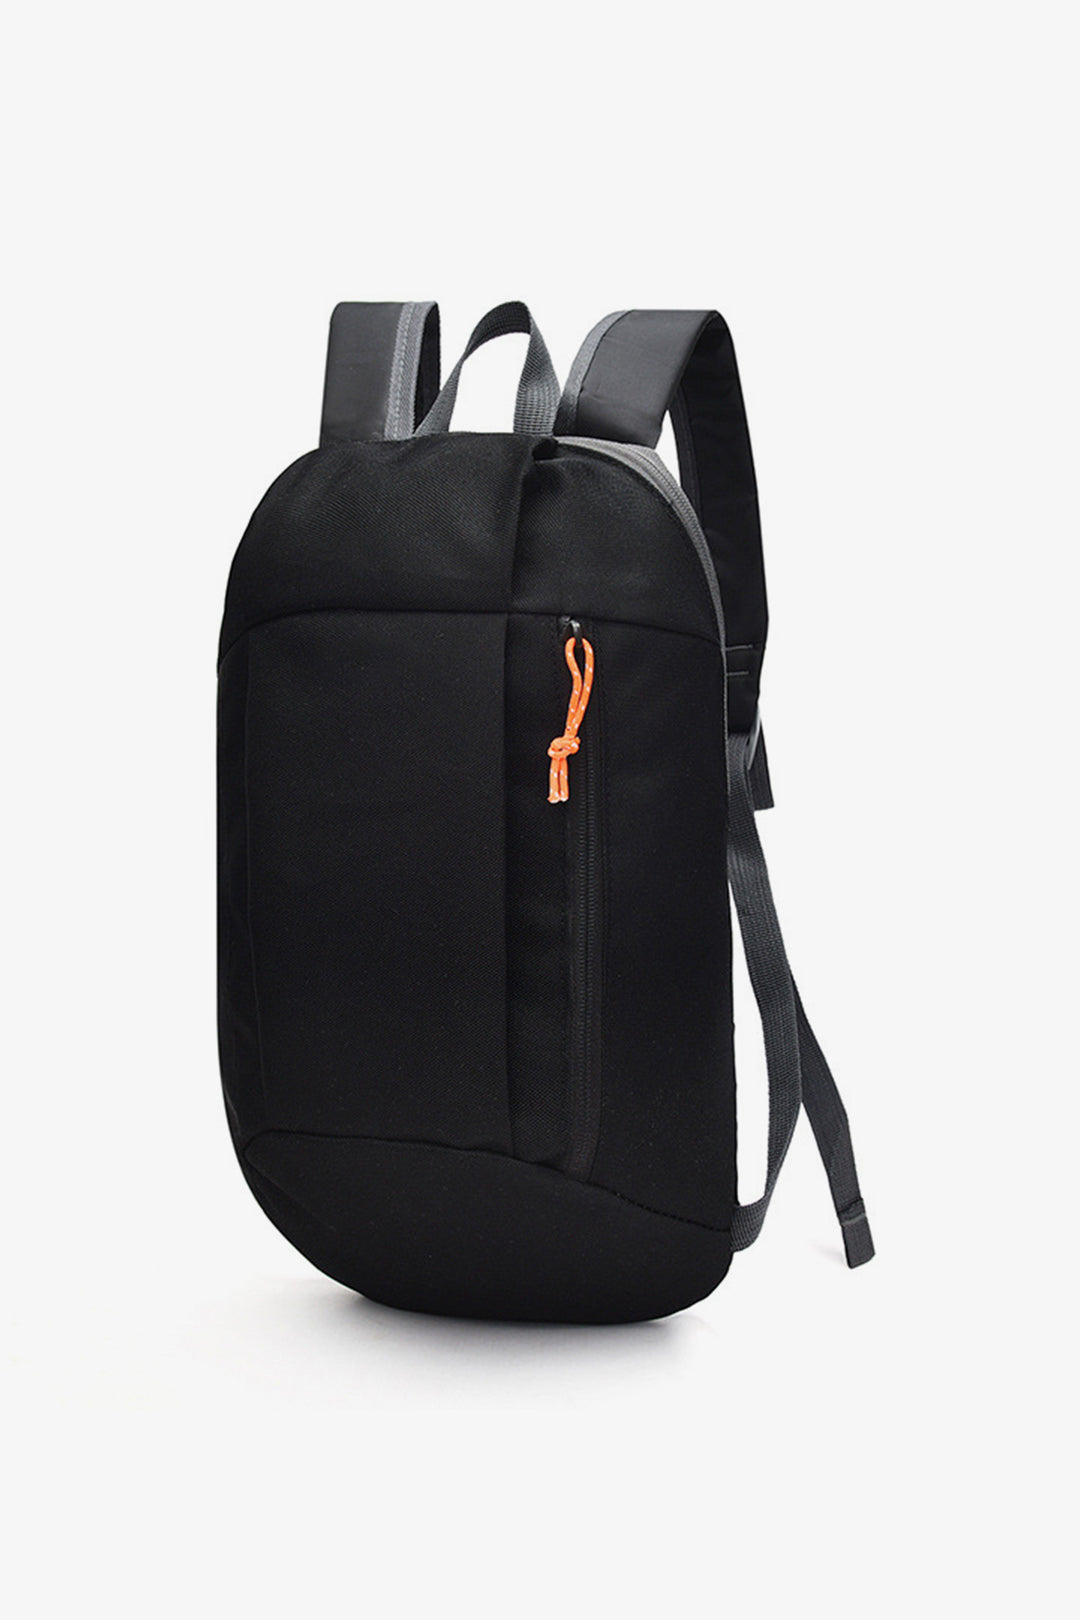 Black Sporty Sling Backpack - A23 - MHB0002